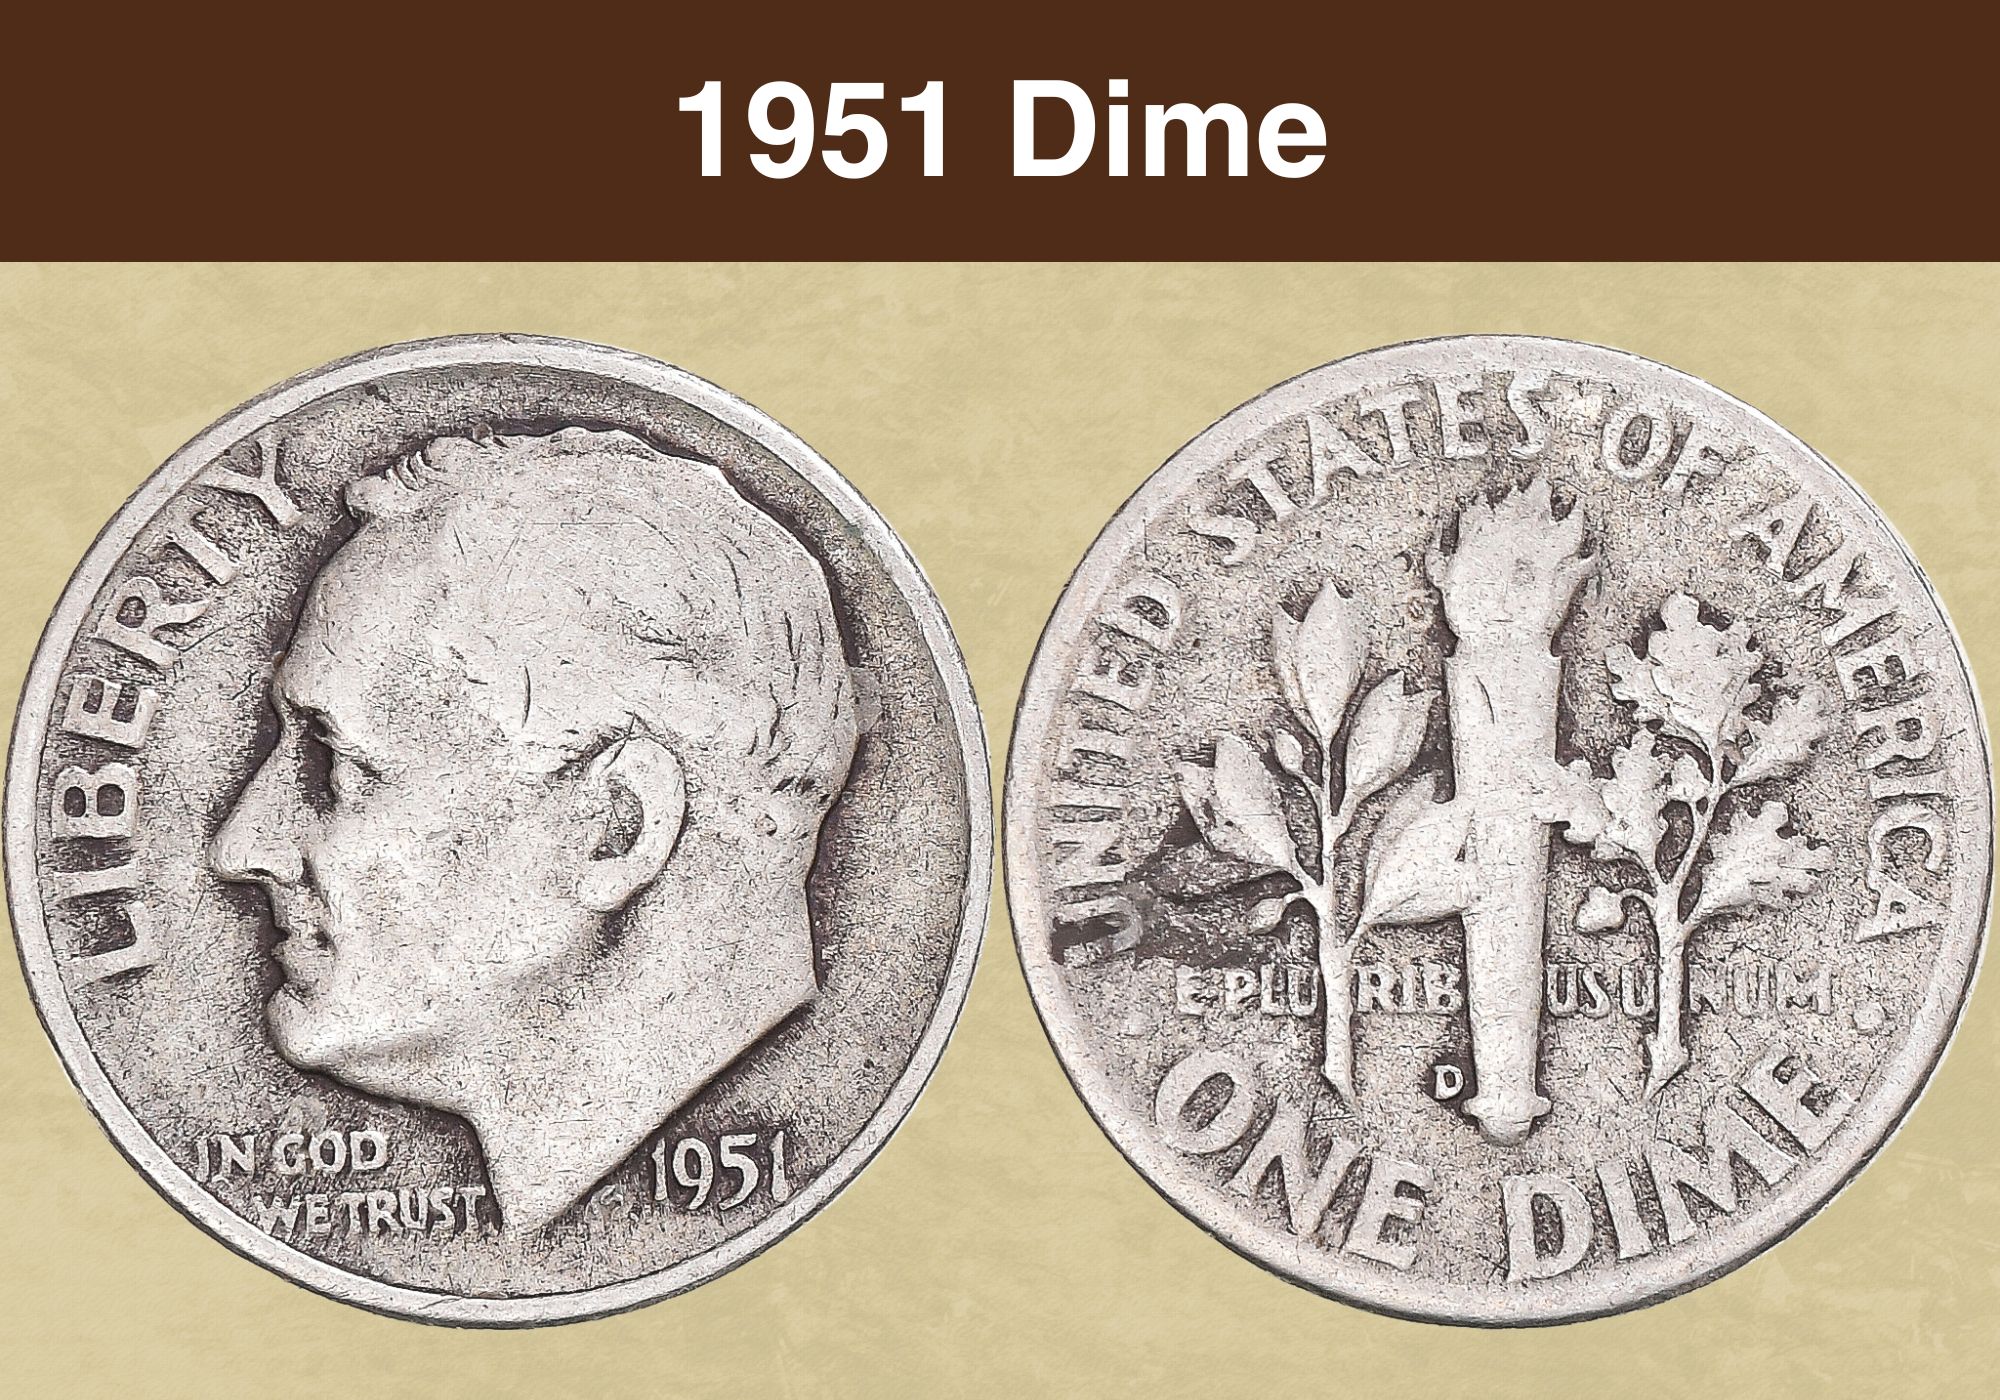 1951 Dime Value